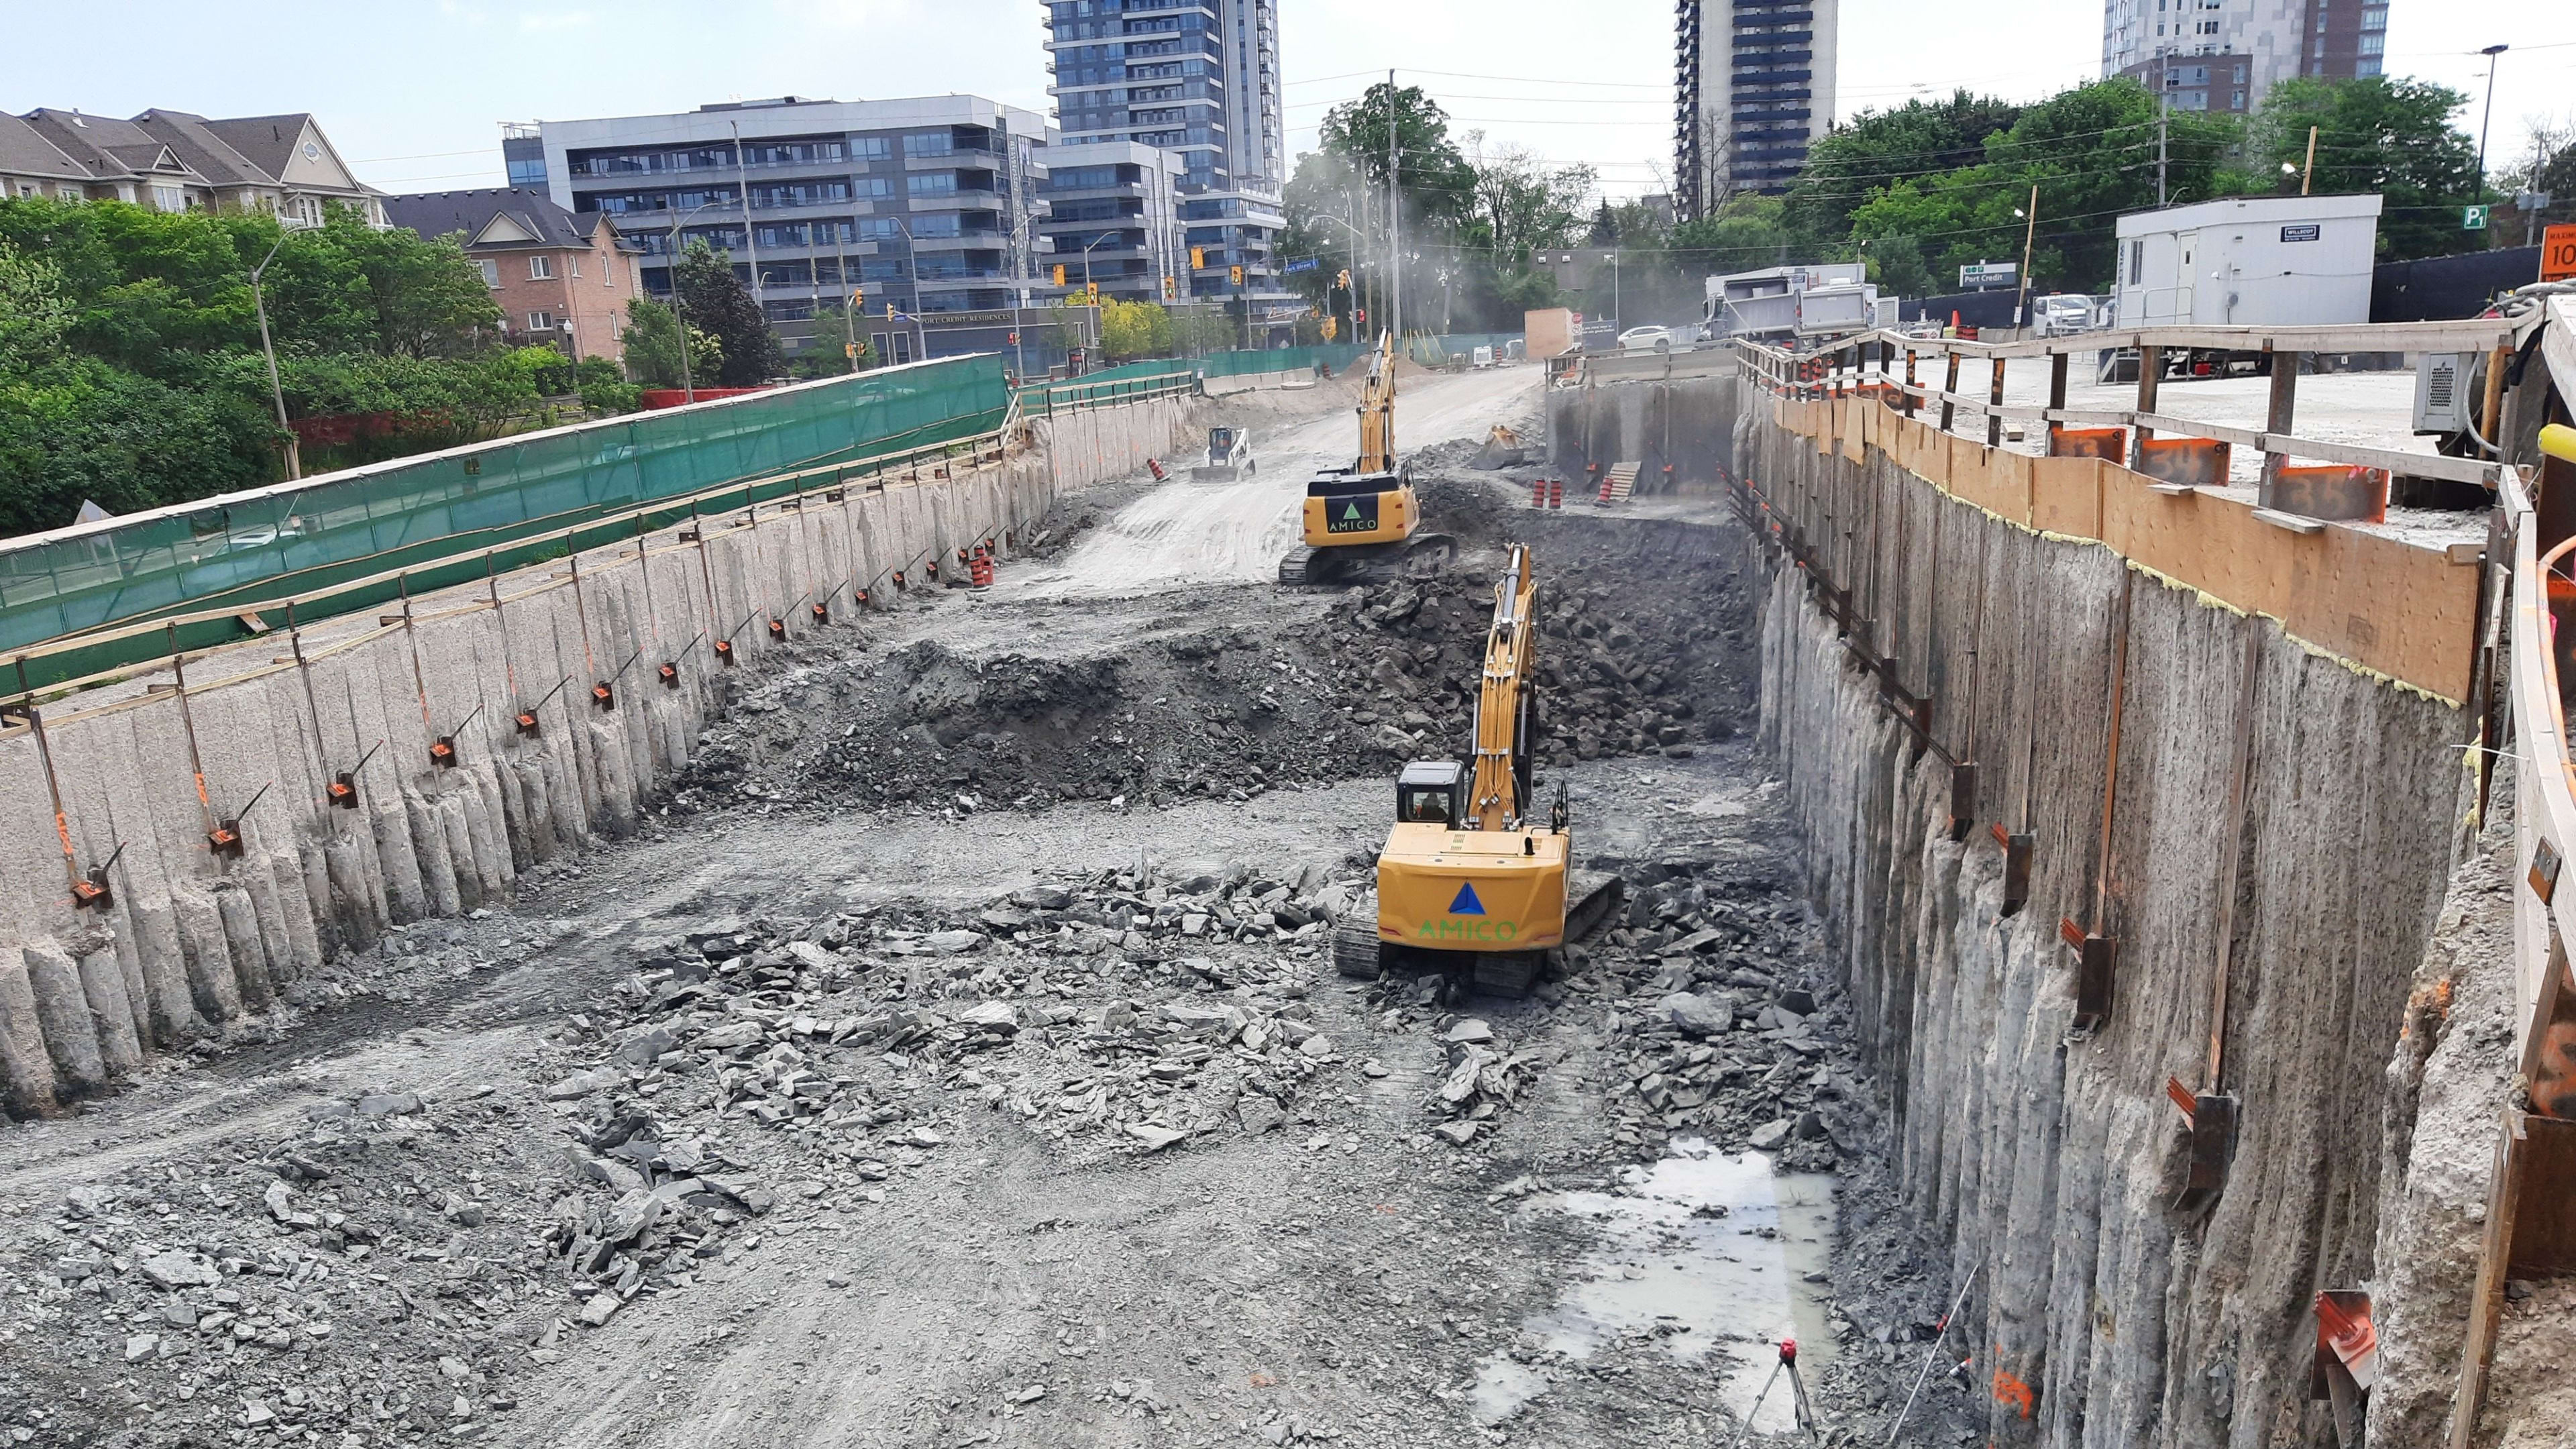 Excavators making progress on the Hurontario LRT project construction at Port Credit GO